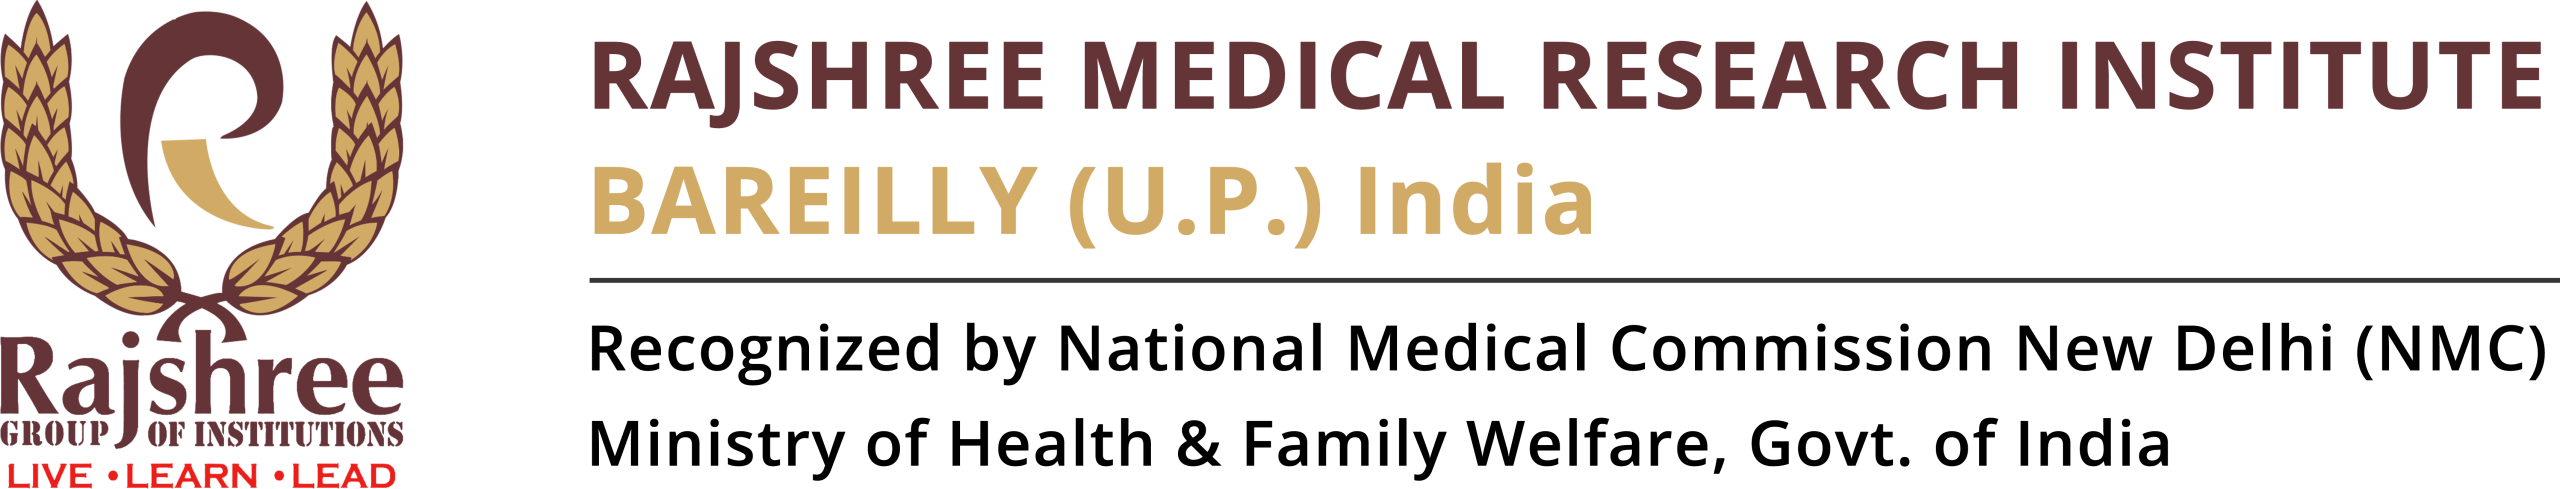 Rajshree Medical